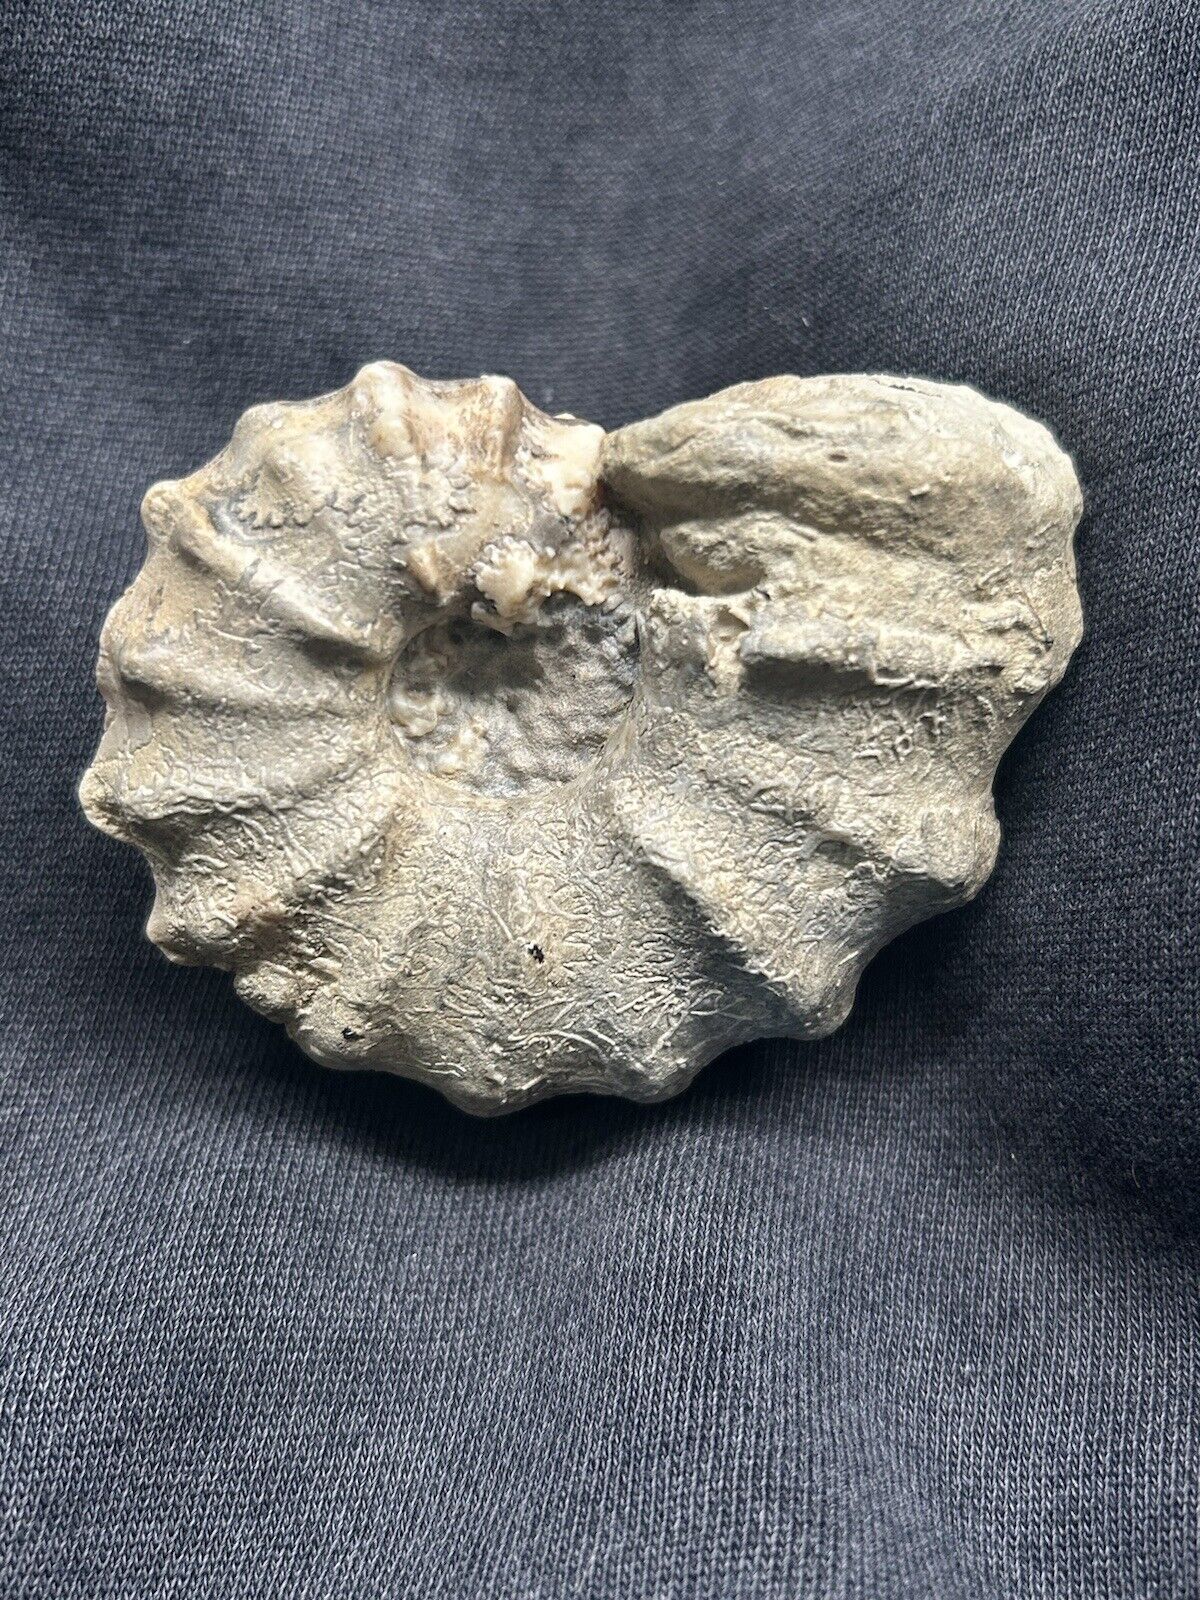 3” RARE Texas Fossil Woodbine Conlinoceras (Calycoceras) Ammonite, Nice Calcite